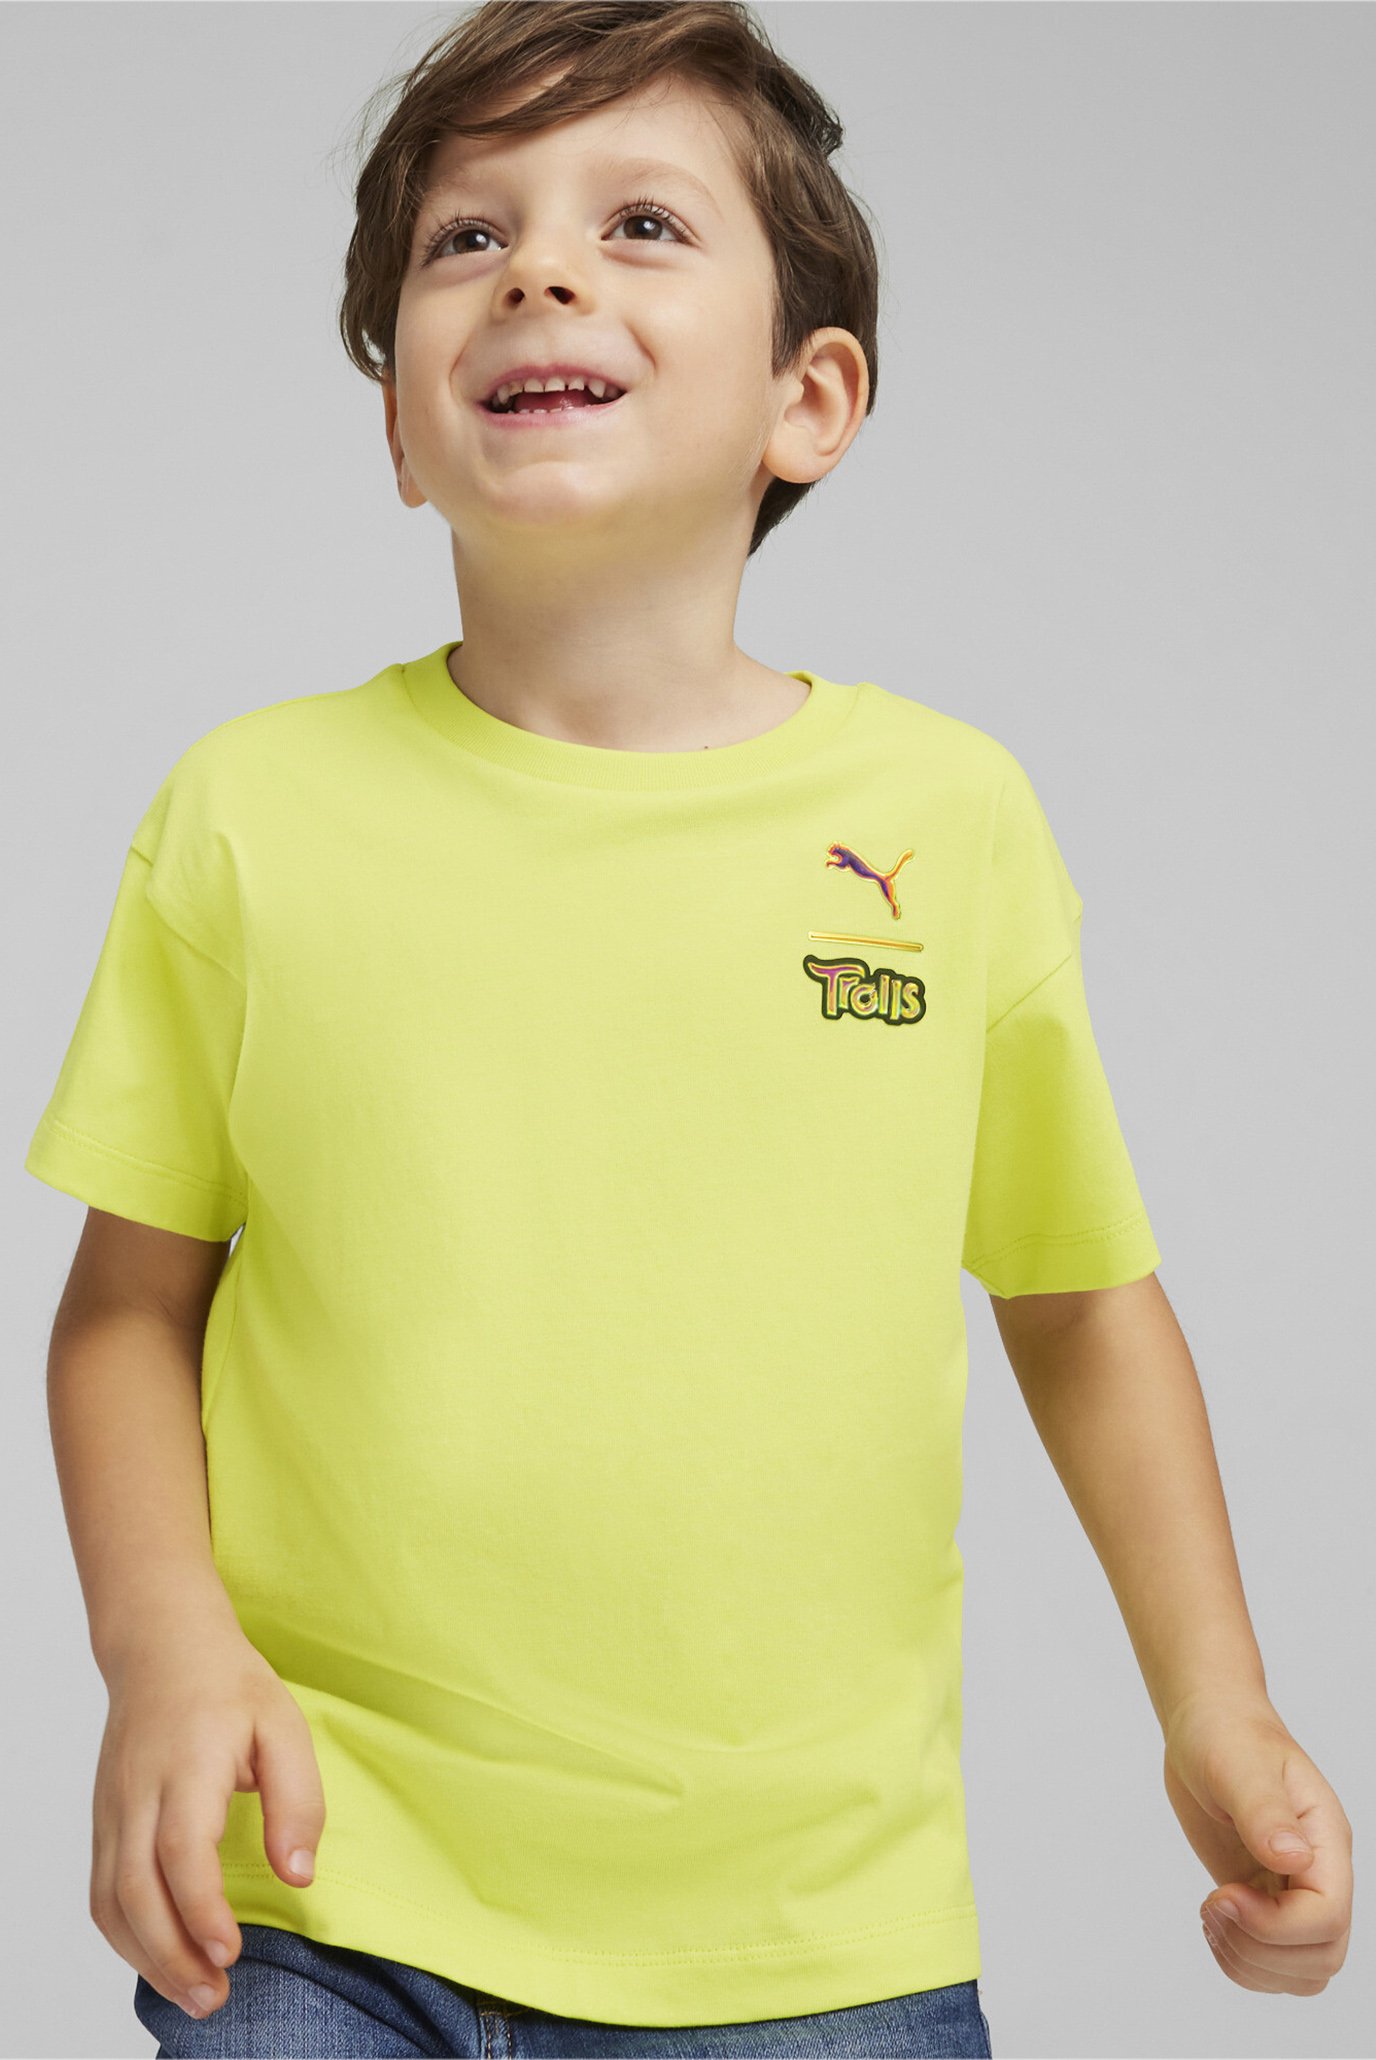 Детская салатовая футболка PUMA x TROLLS Kids' Graphic Tee 1